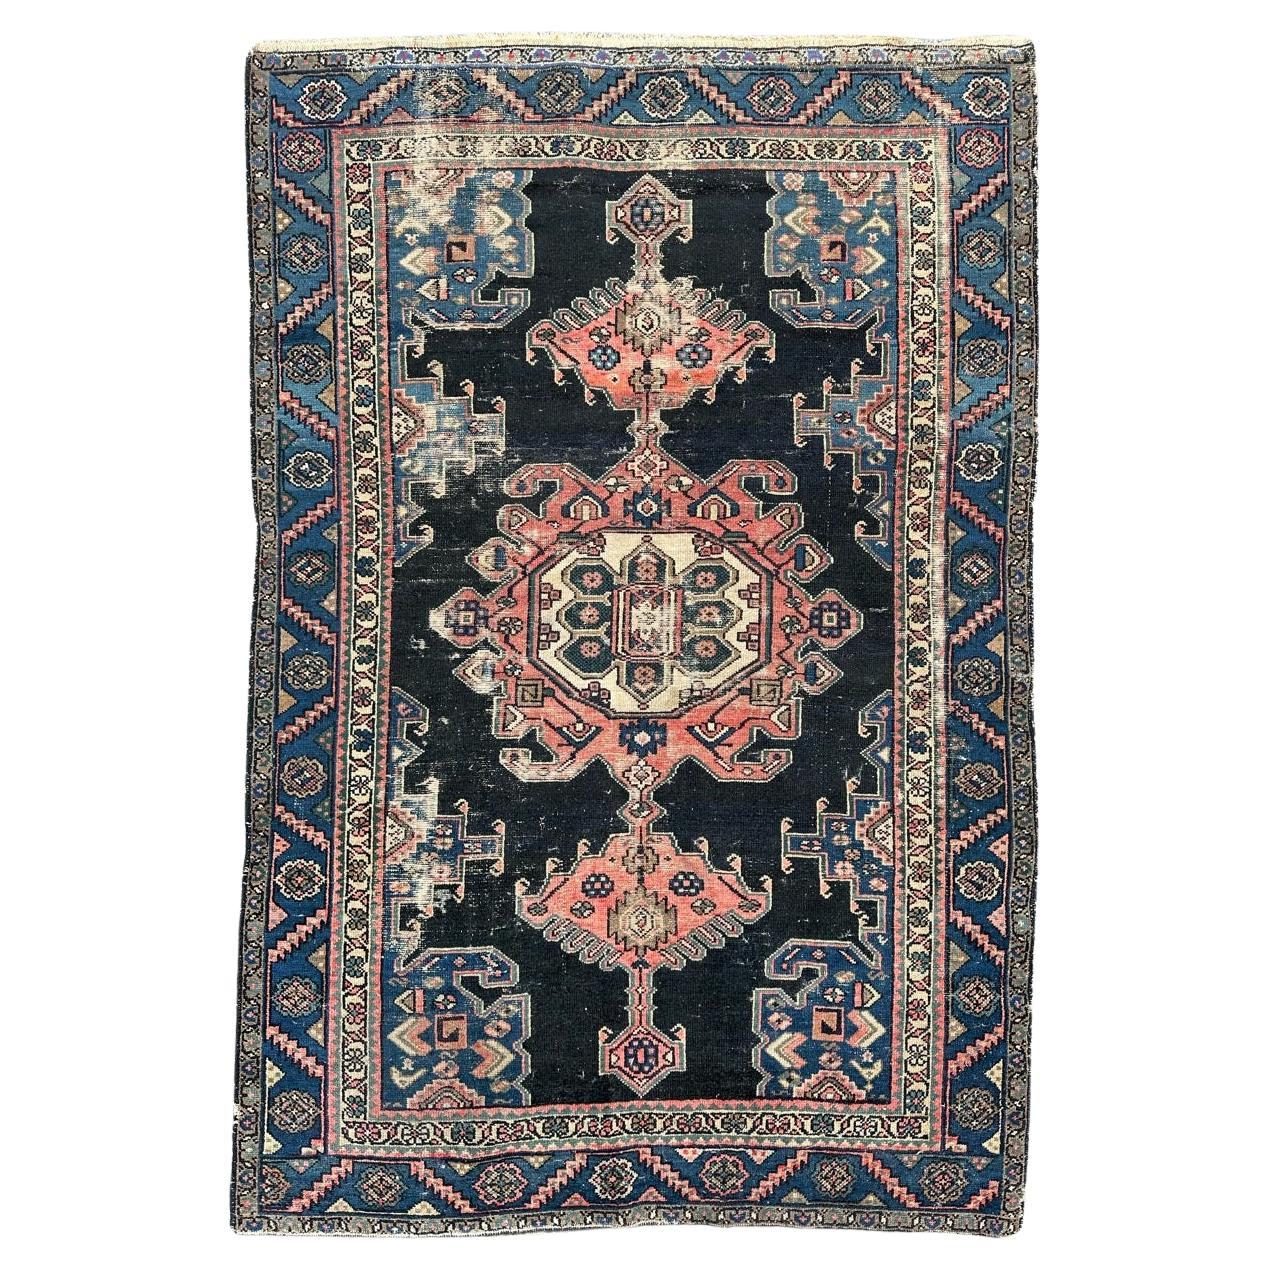 Bobyrug’s nice antique distressed Hamadan rug  For Sale